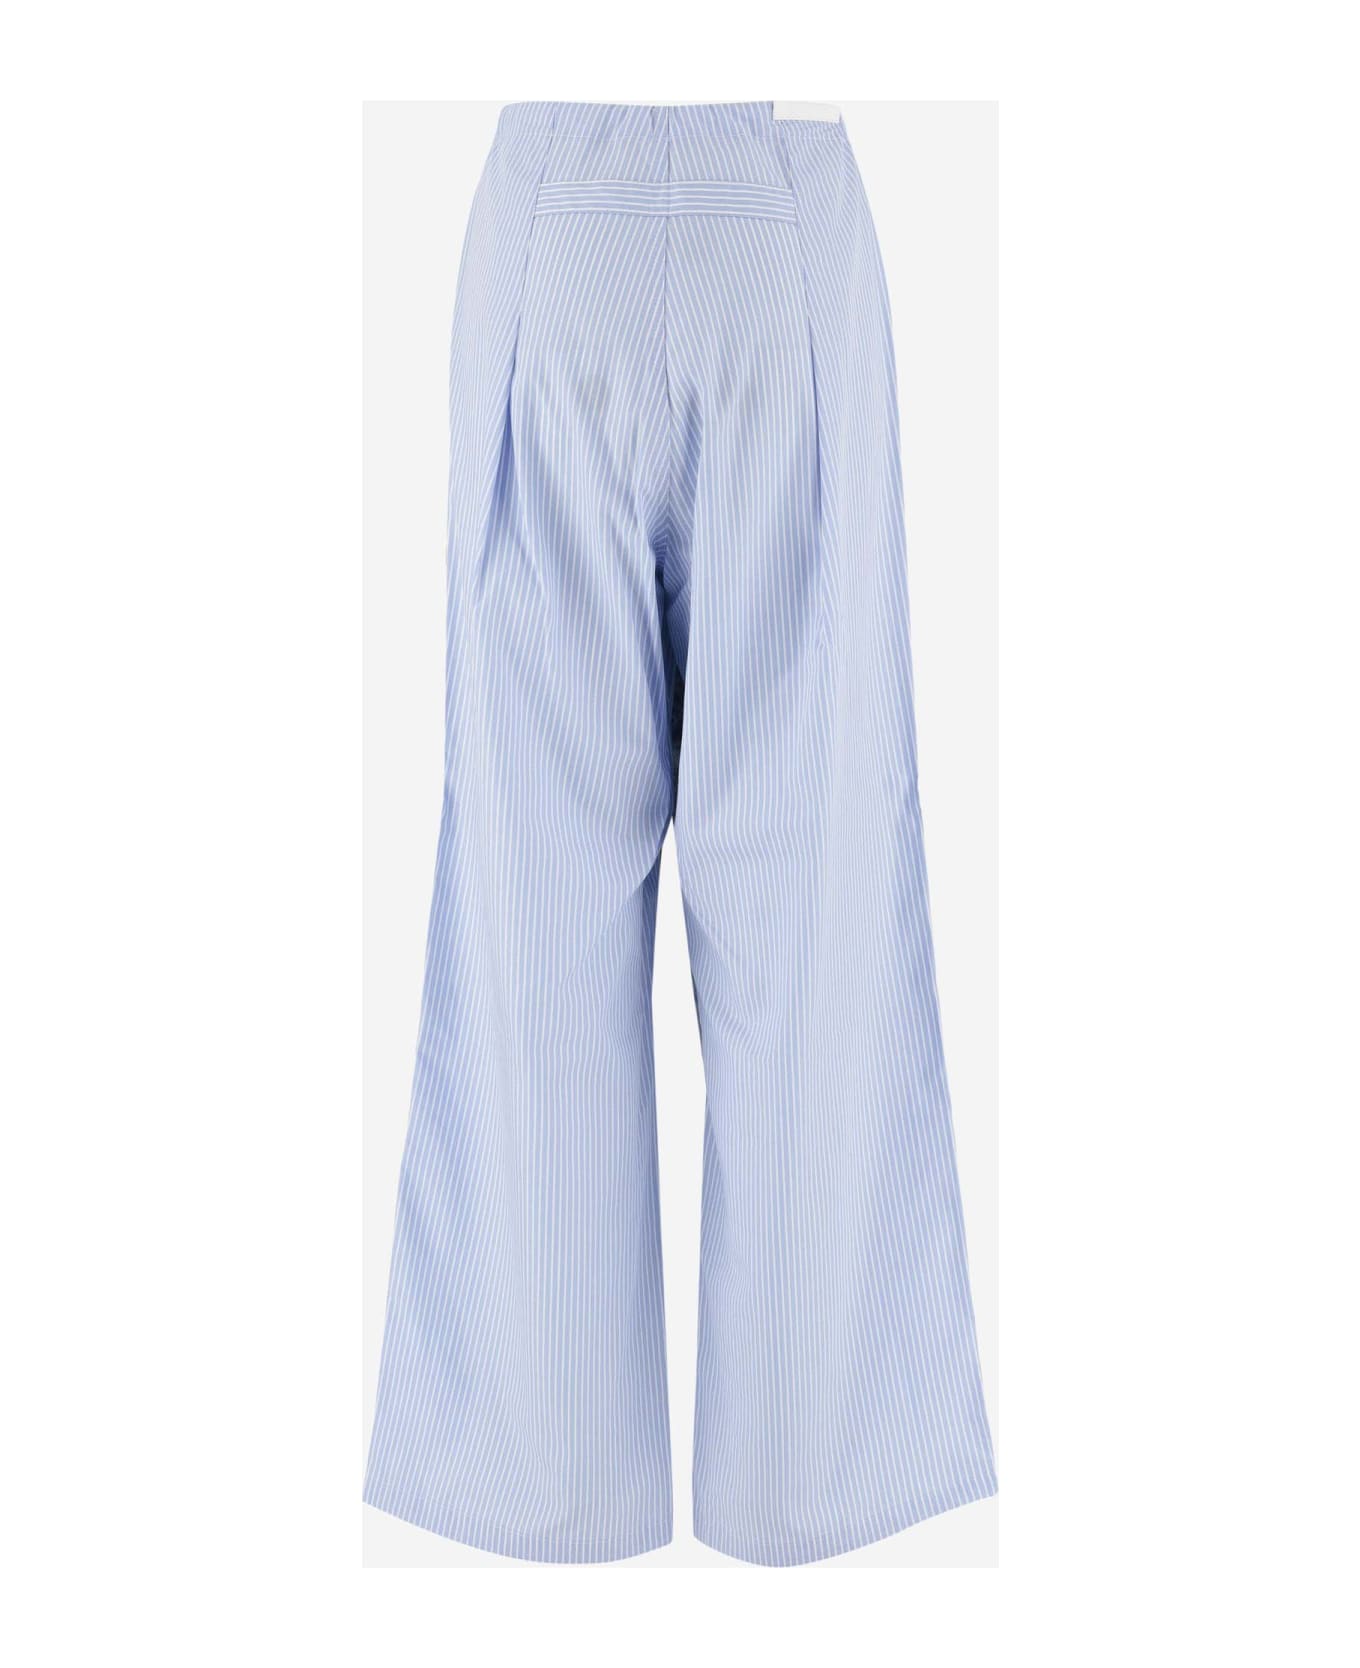 DARKPARK Striped Cotton Pants - LIGHT BLUE/WHITE